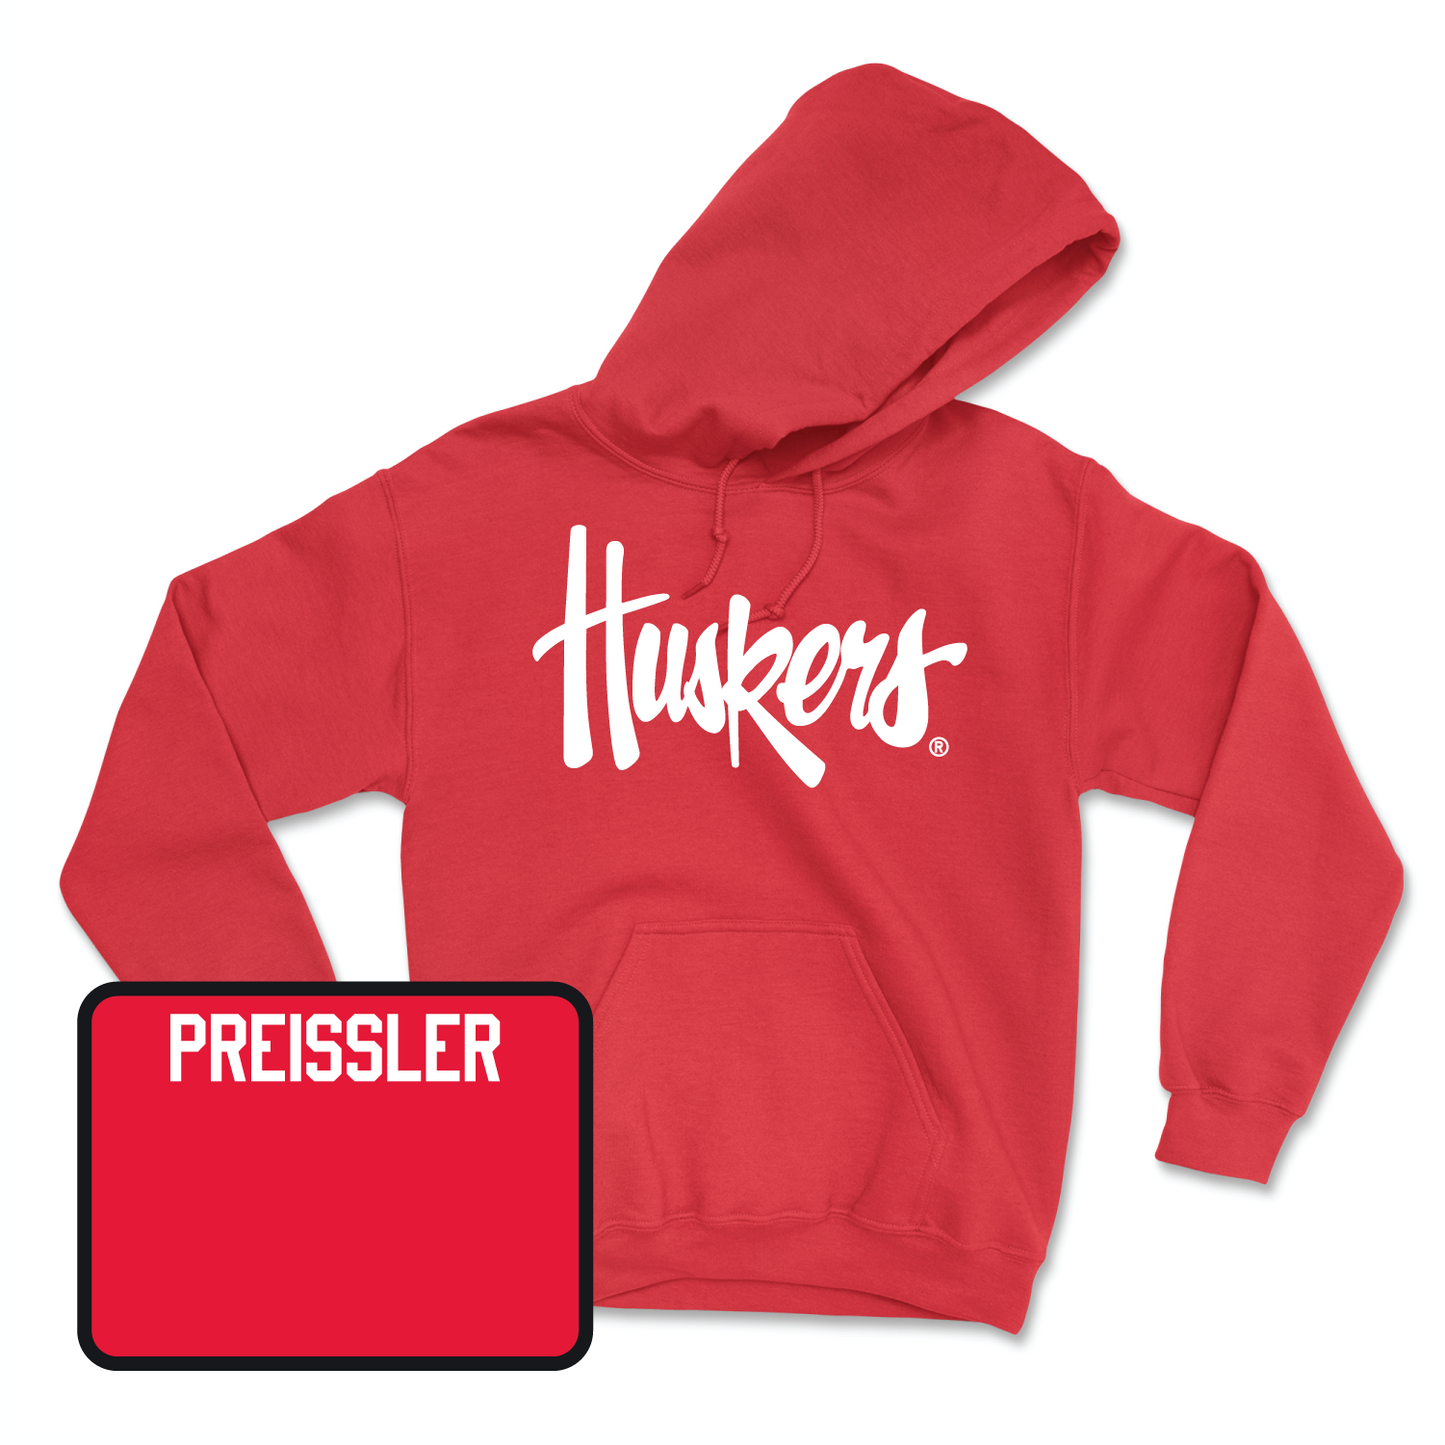 Red Track & Field Huskers Hoodie Youth Large / Hannah Preissler